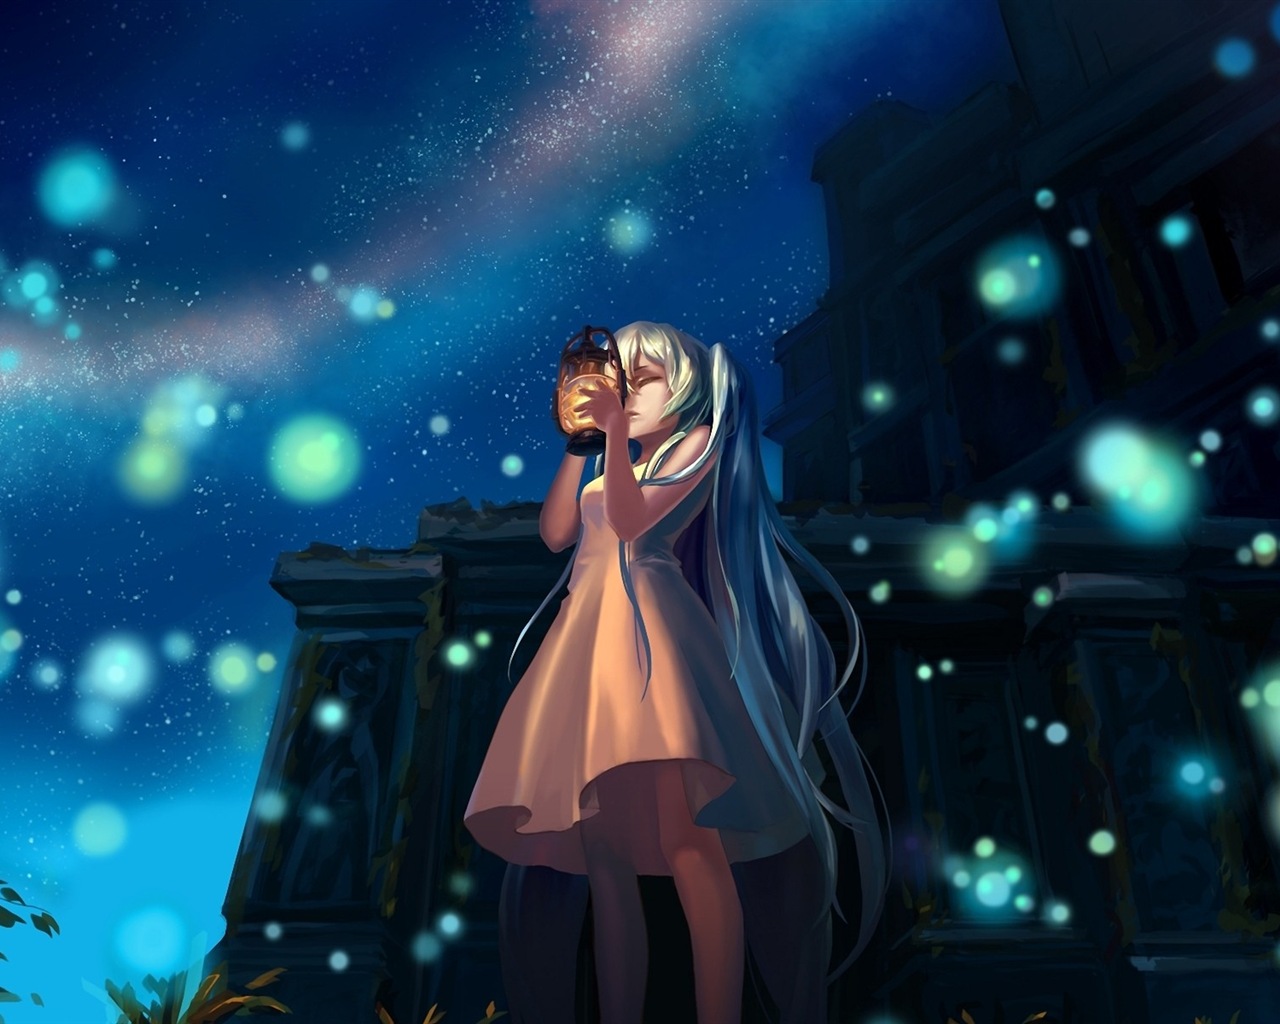 Firefly Summer beautiful anime wallpaper #16 - 1280x1024